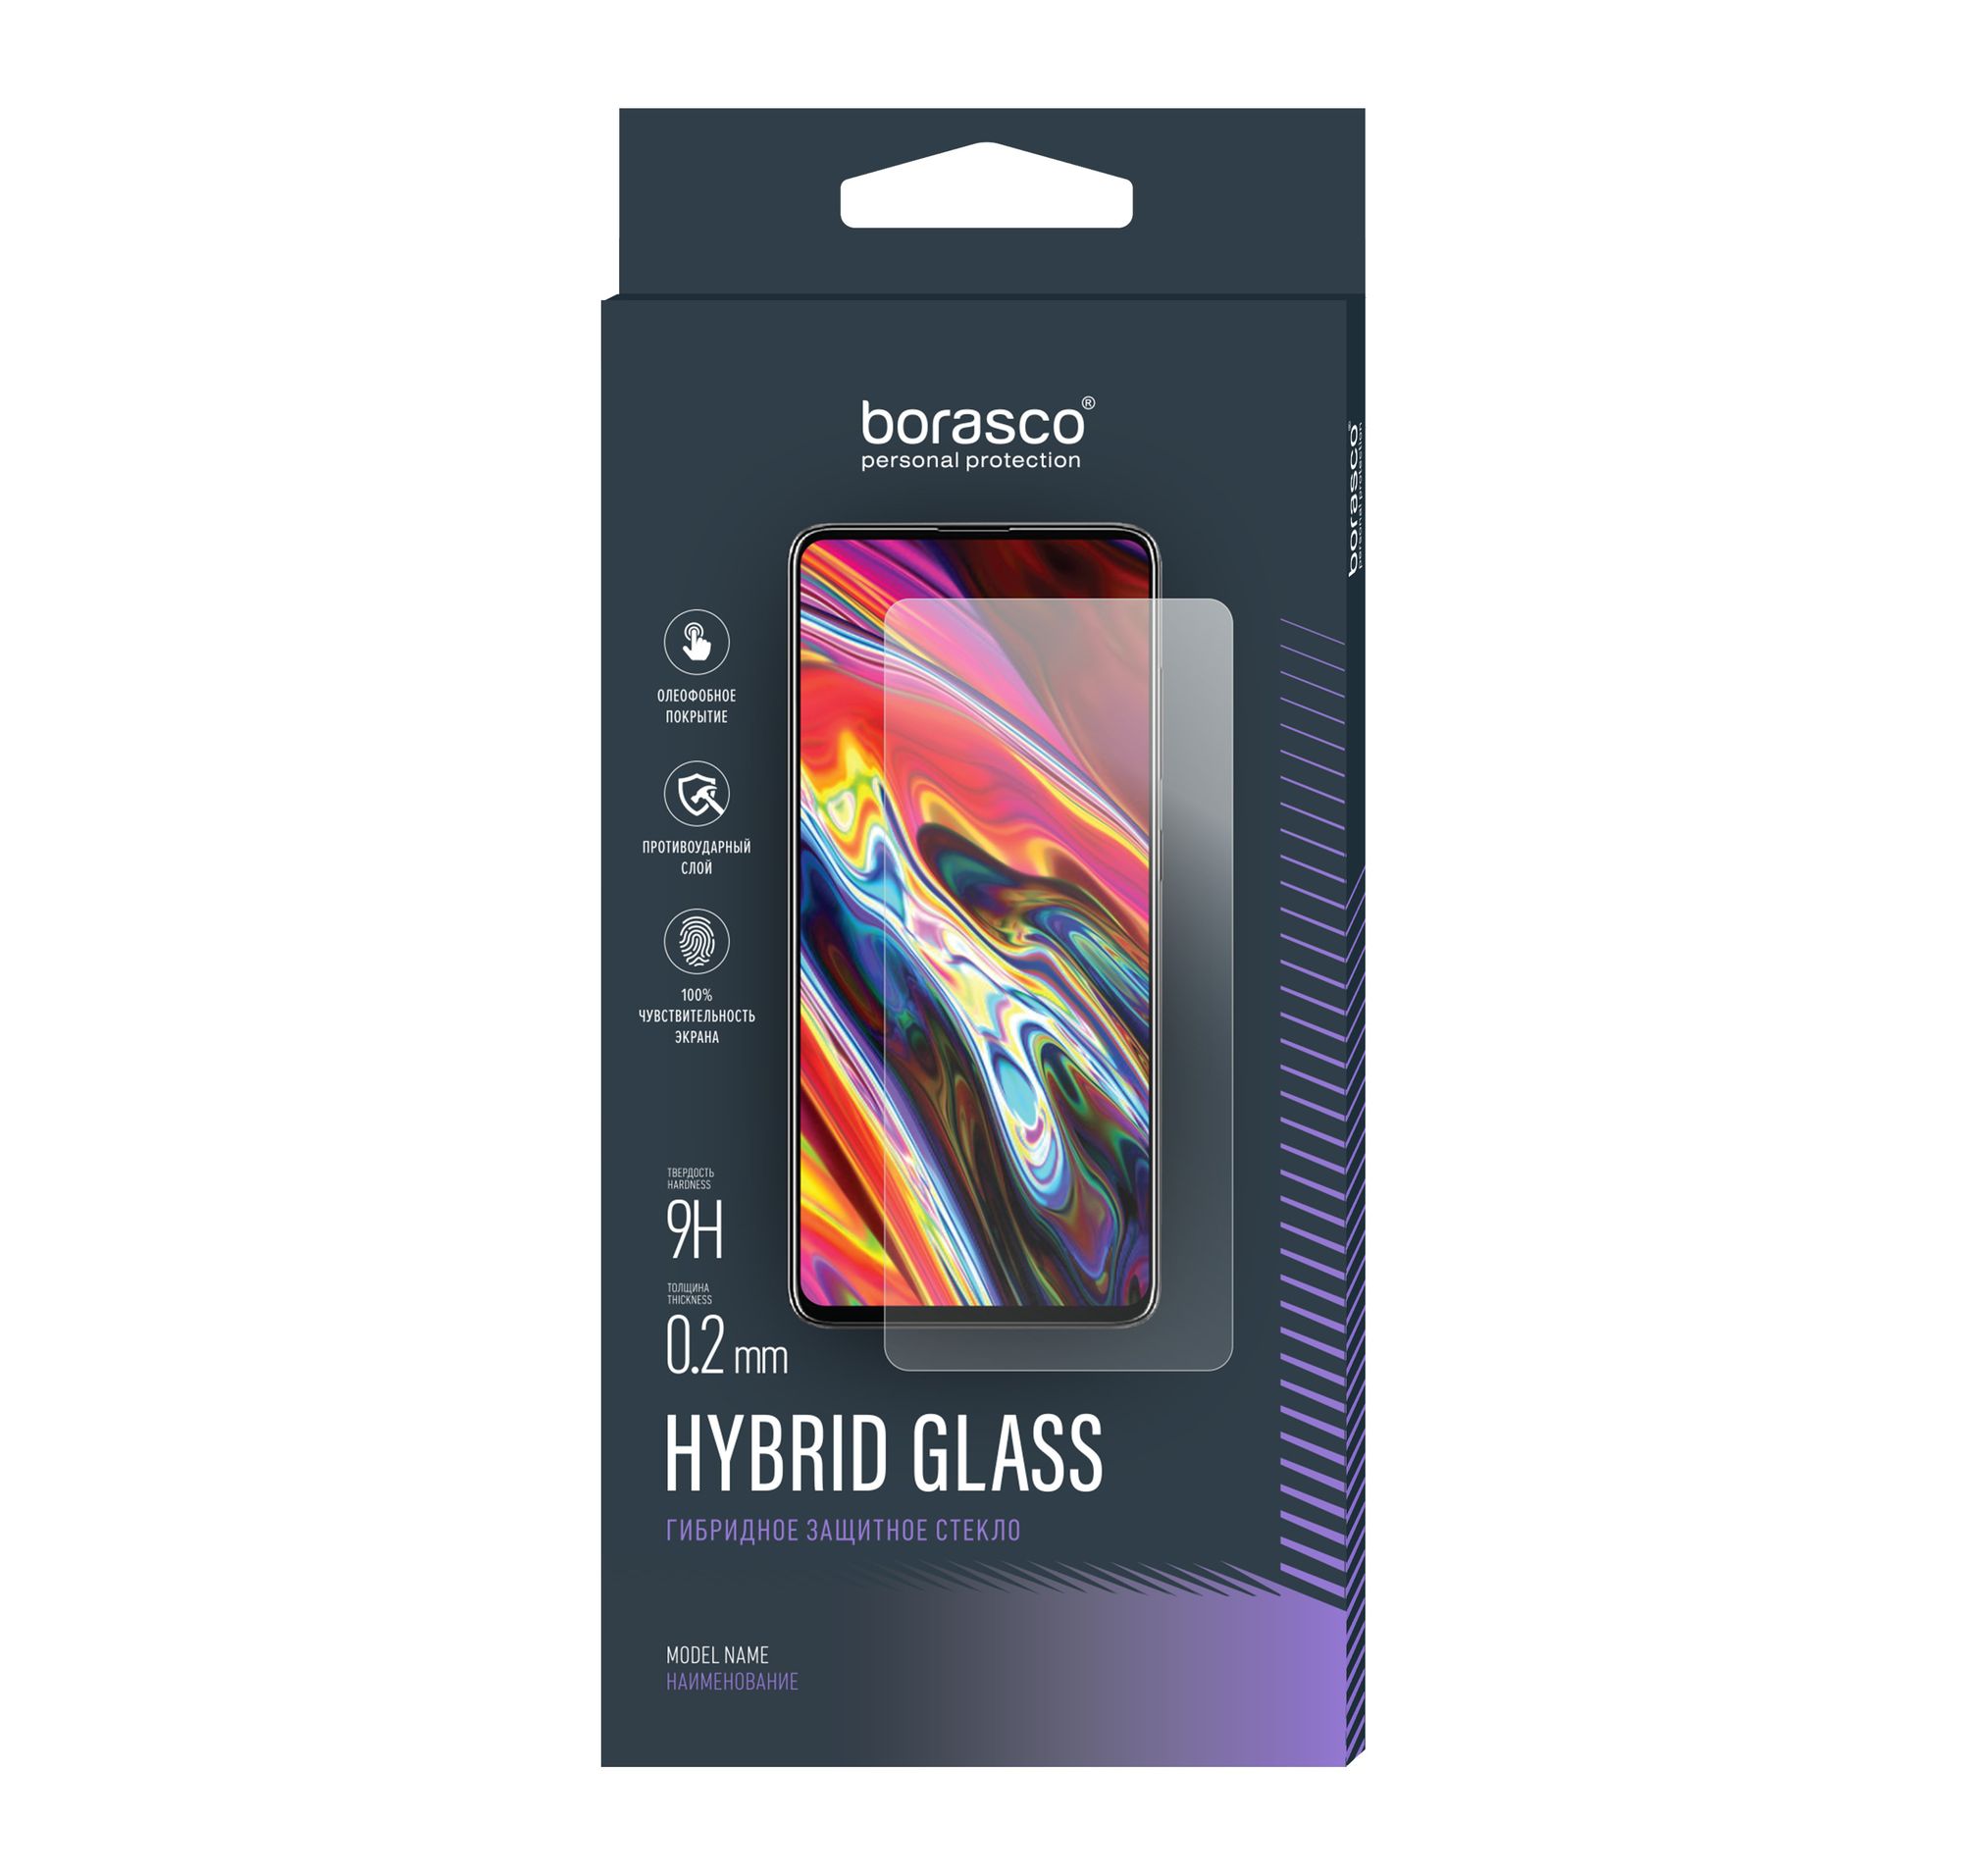 Стекло защитное Hybrid Glass VSP 0,26 мм для Sony Xperia Z5 защитное стекло для sony xperia z3 d6603 2 5d